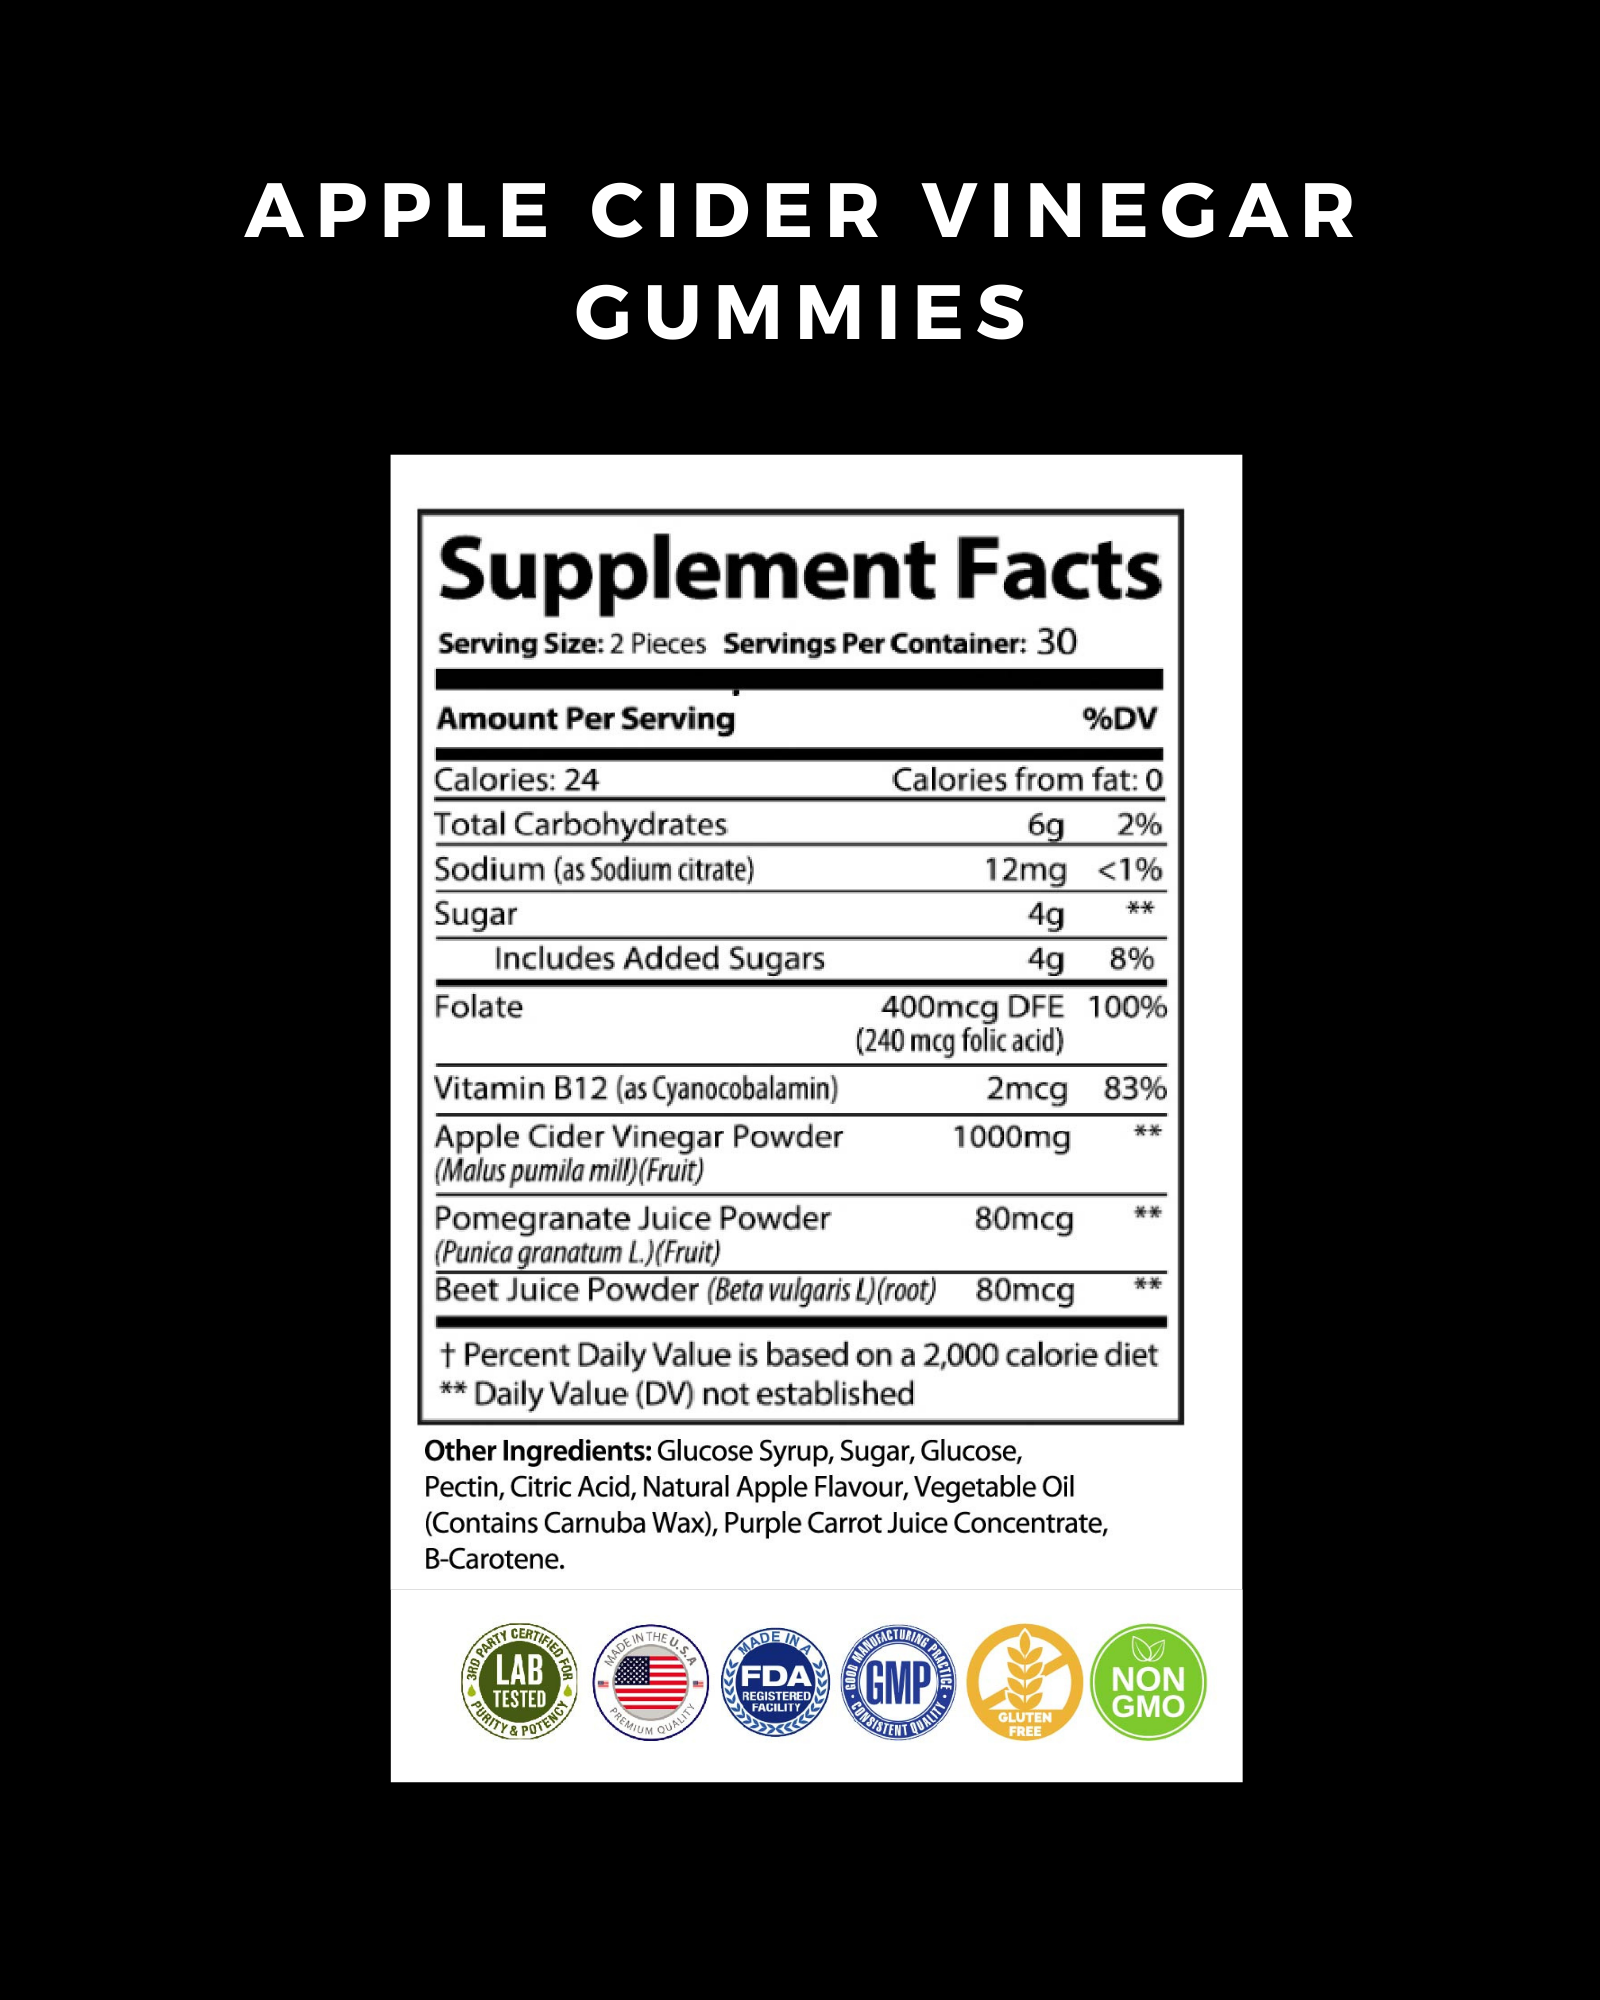 Apple Cider Vinegar Gummies: Benefits and Nutrition